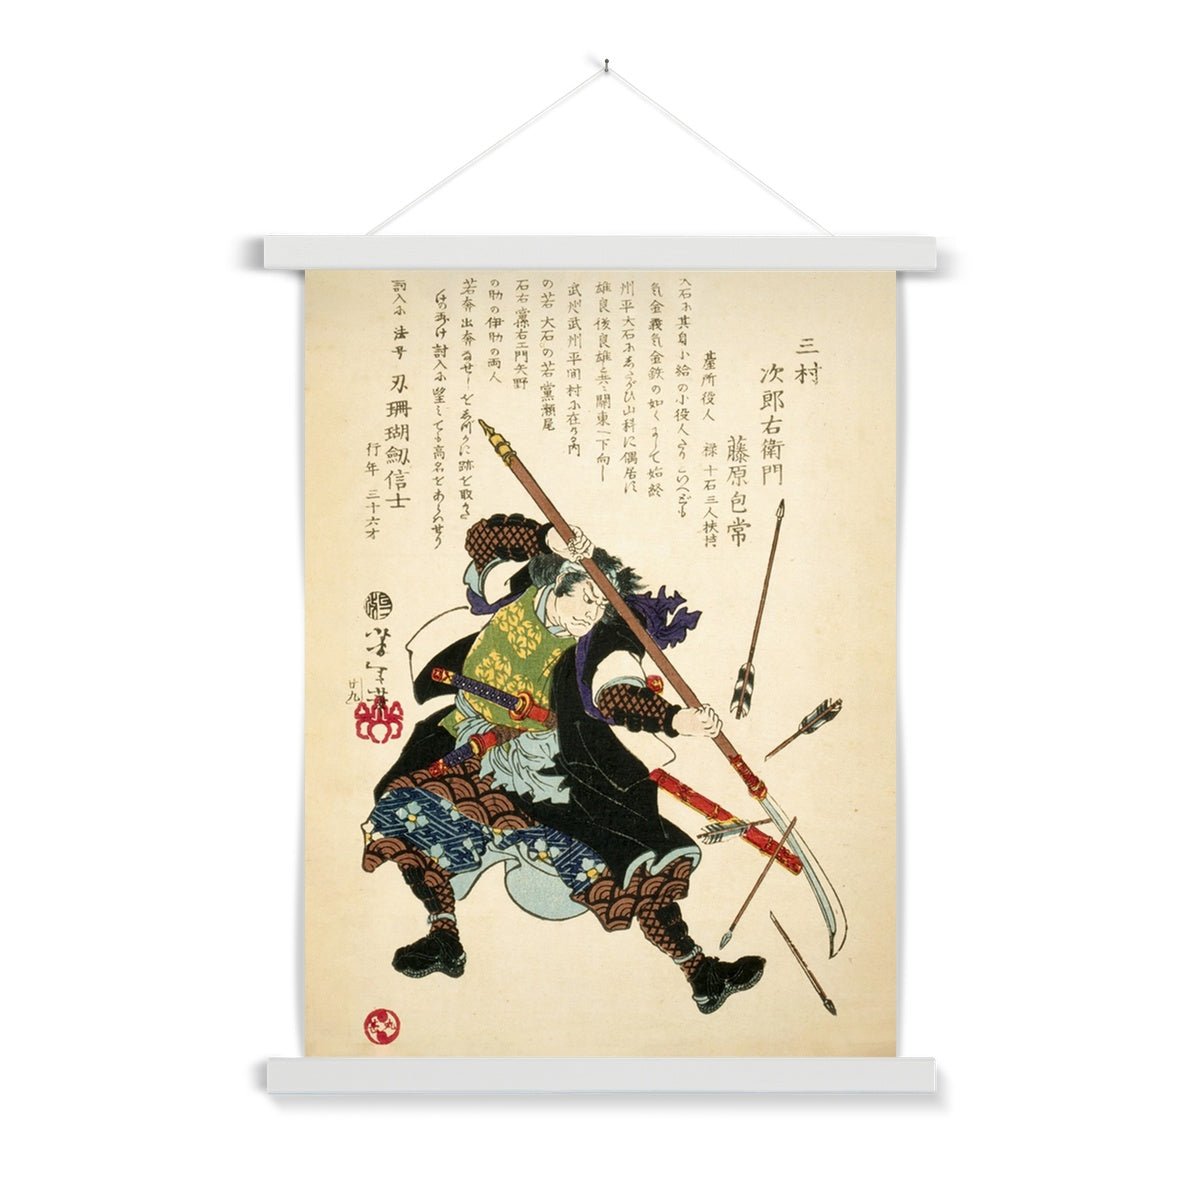 Fine art 18"x24" / White Frame Ronin Fending off Arrows | Legendary Samurai Ronin | Taiso Yoshitoshi Japanese Warrior Fine Art Print with Hanger